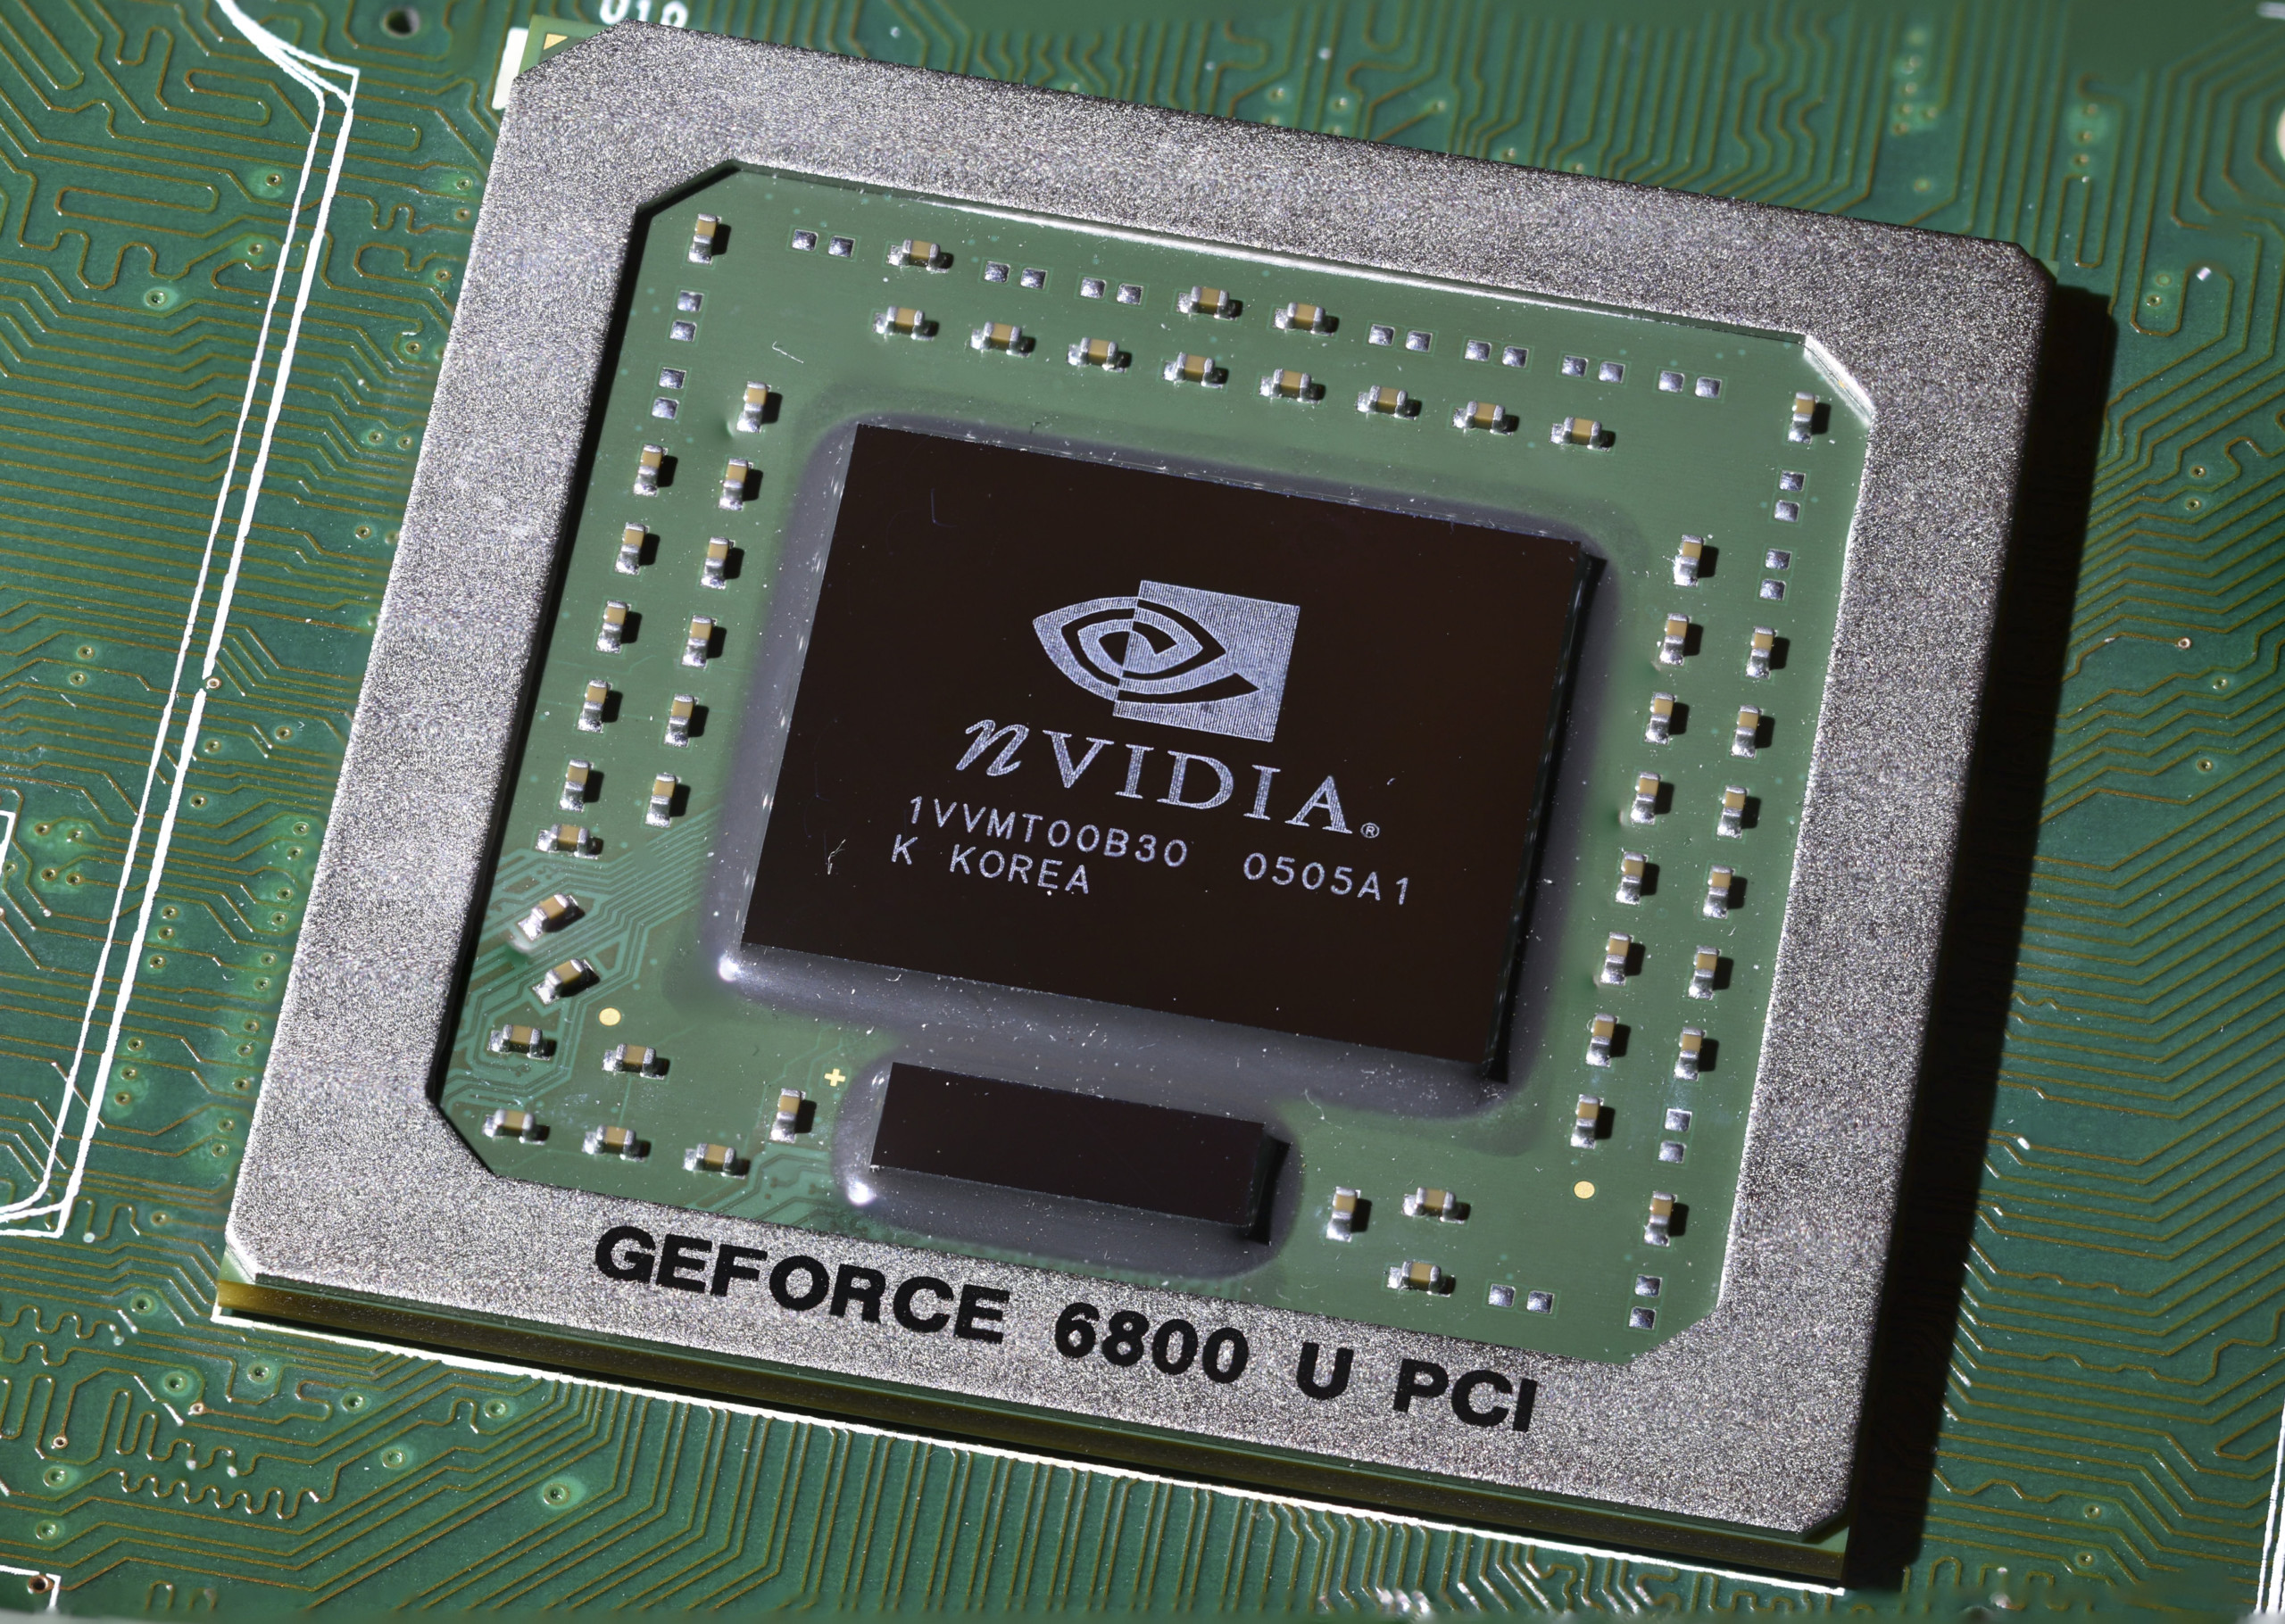 Chip for Nvidia GeForce GPU